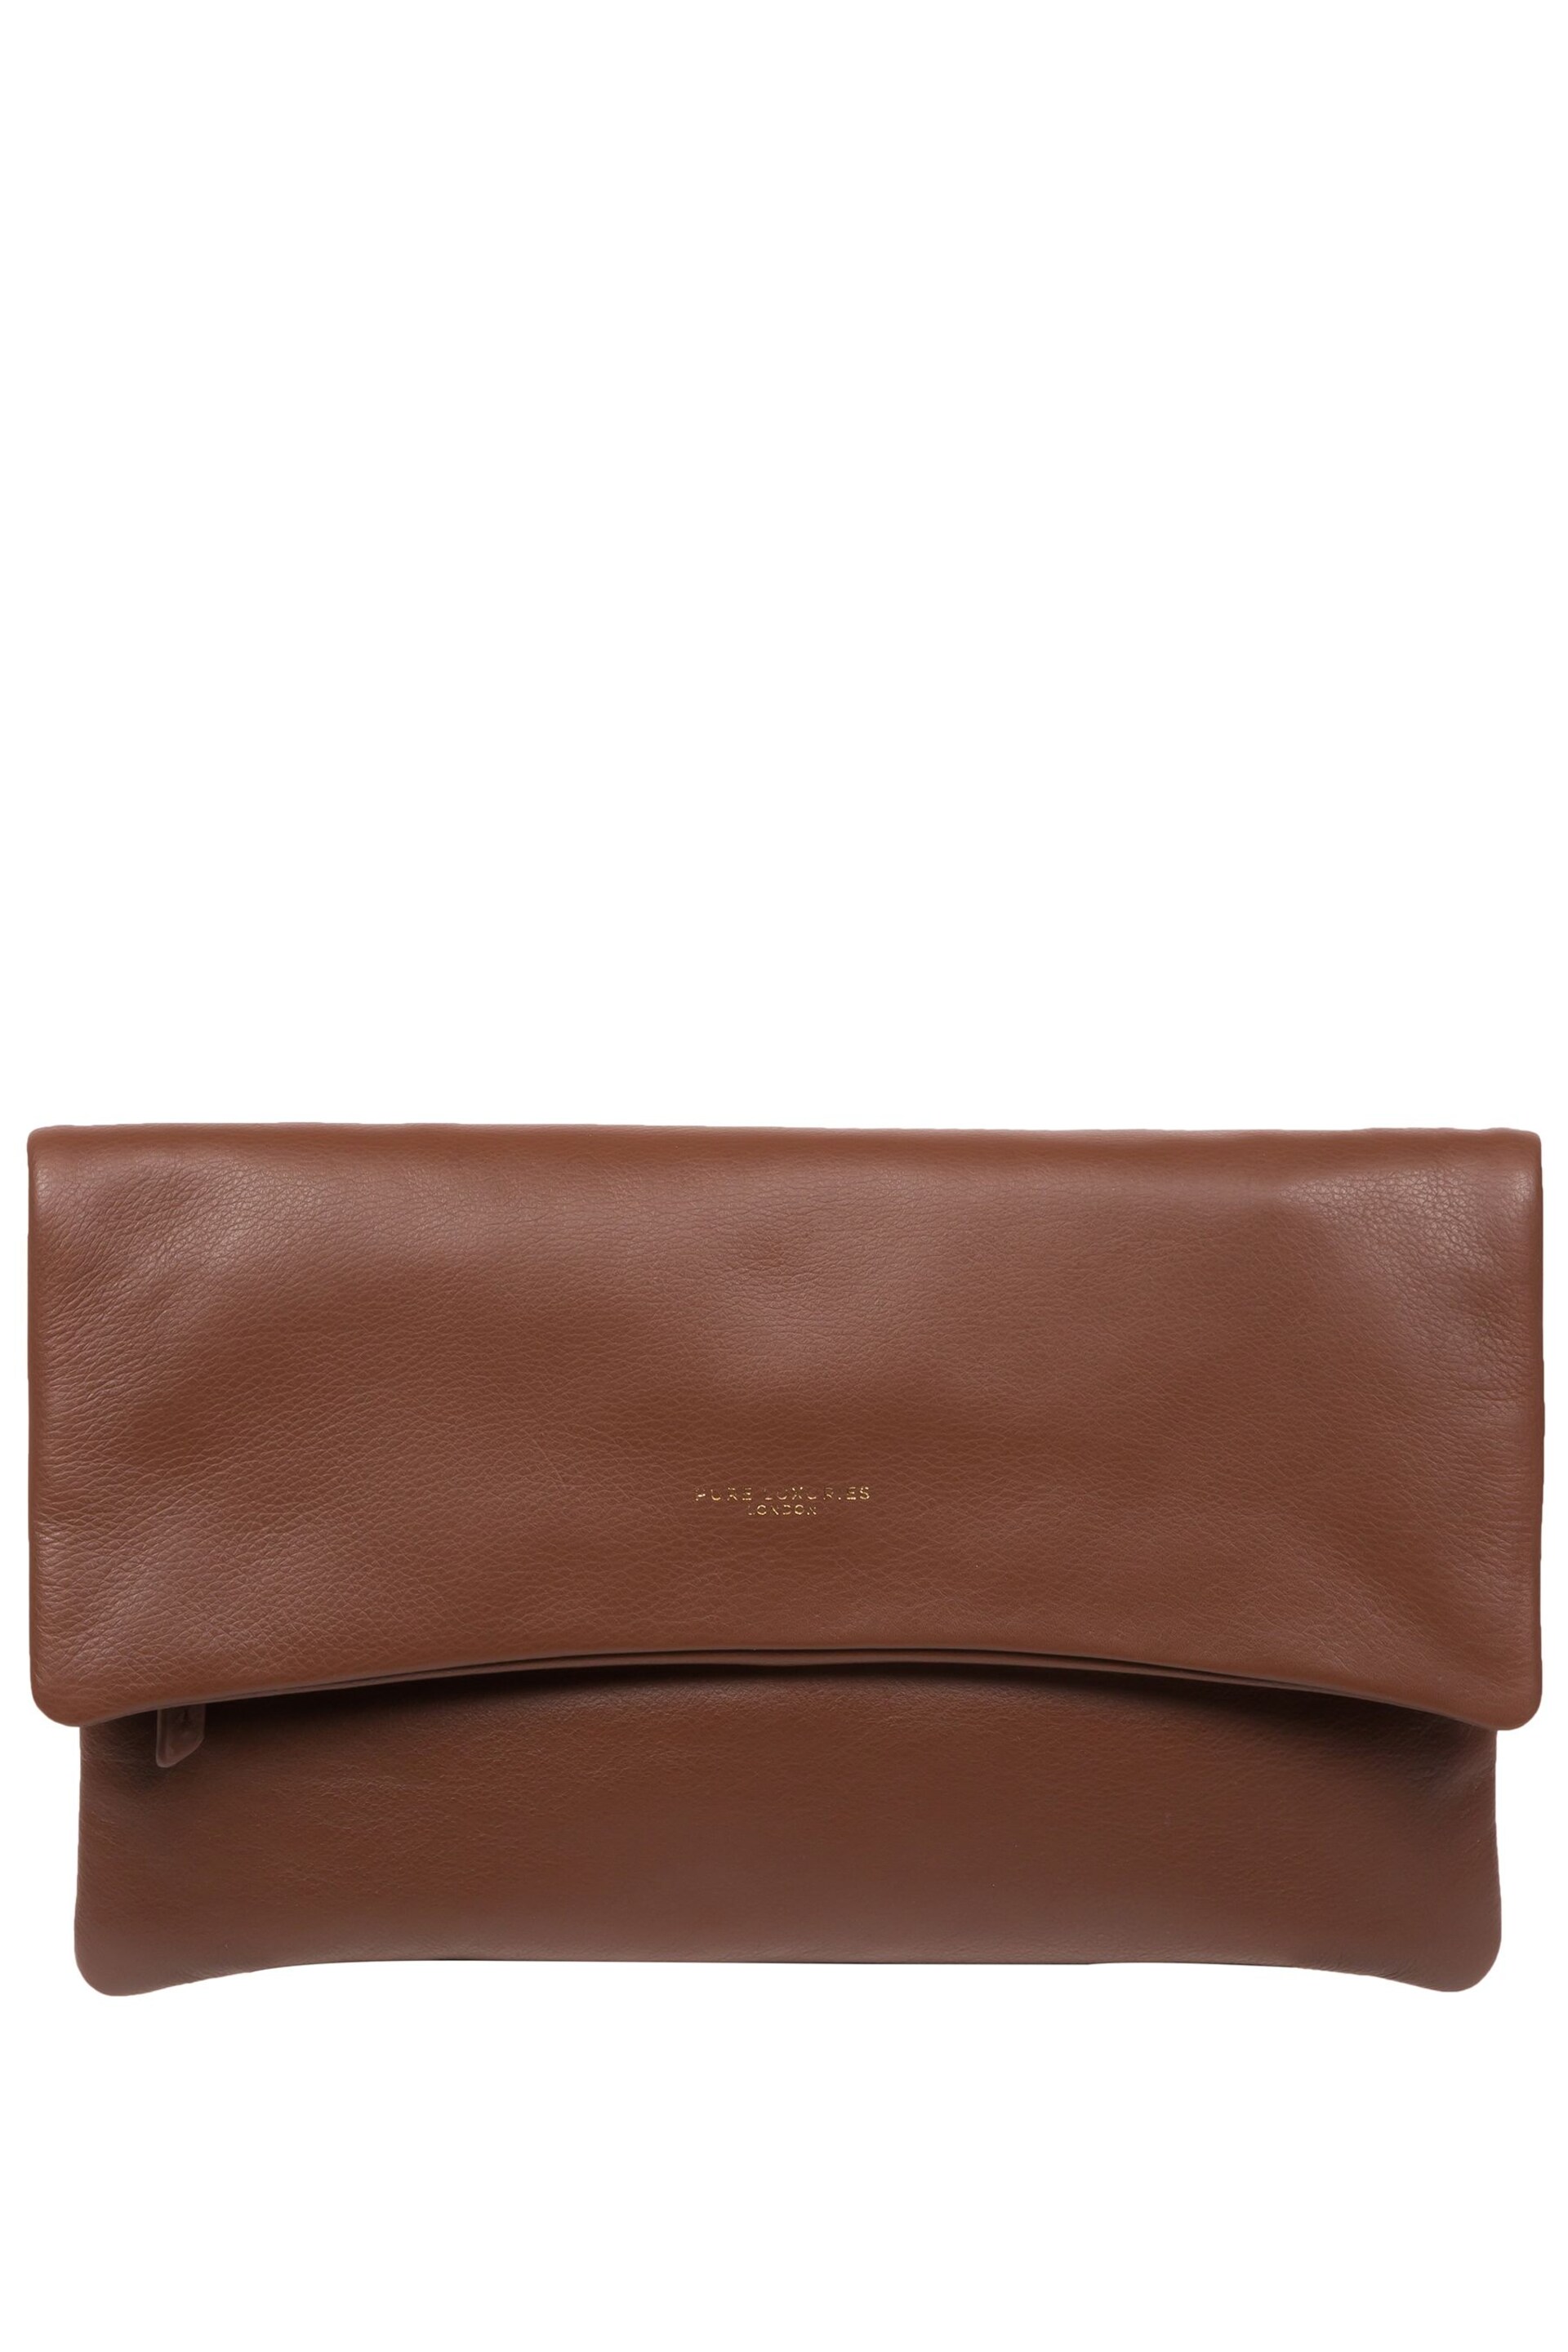 Pure Luxuries London Amelia Nappa Leather Clutch Bag - Image 1 of 4